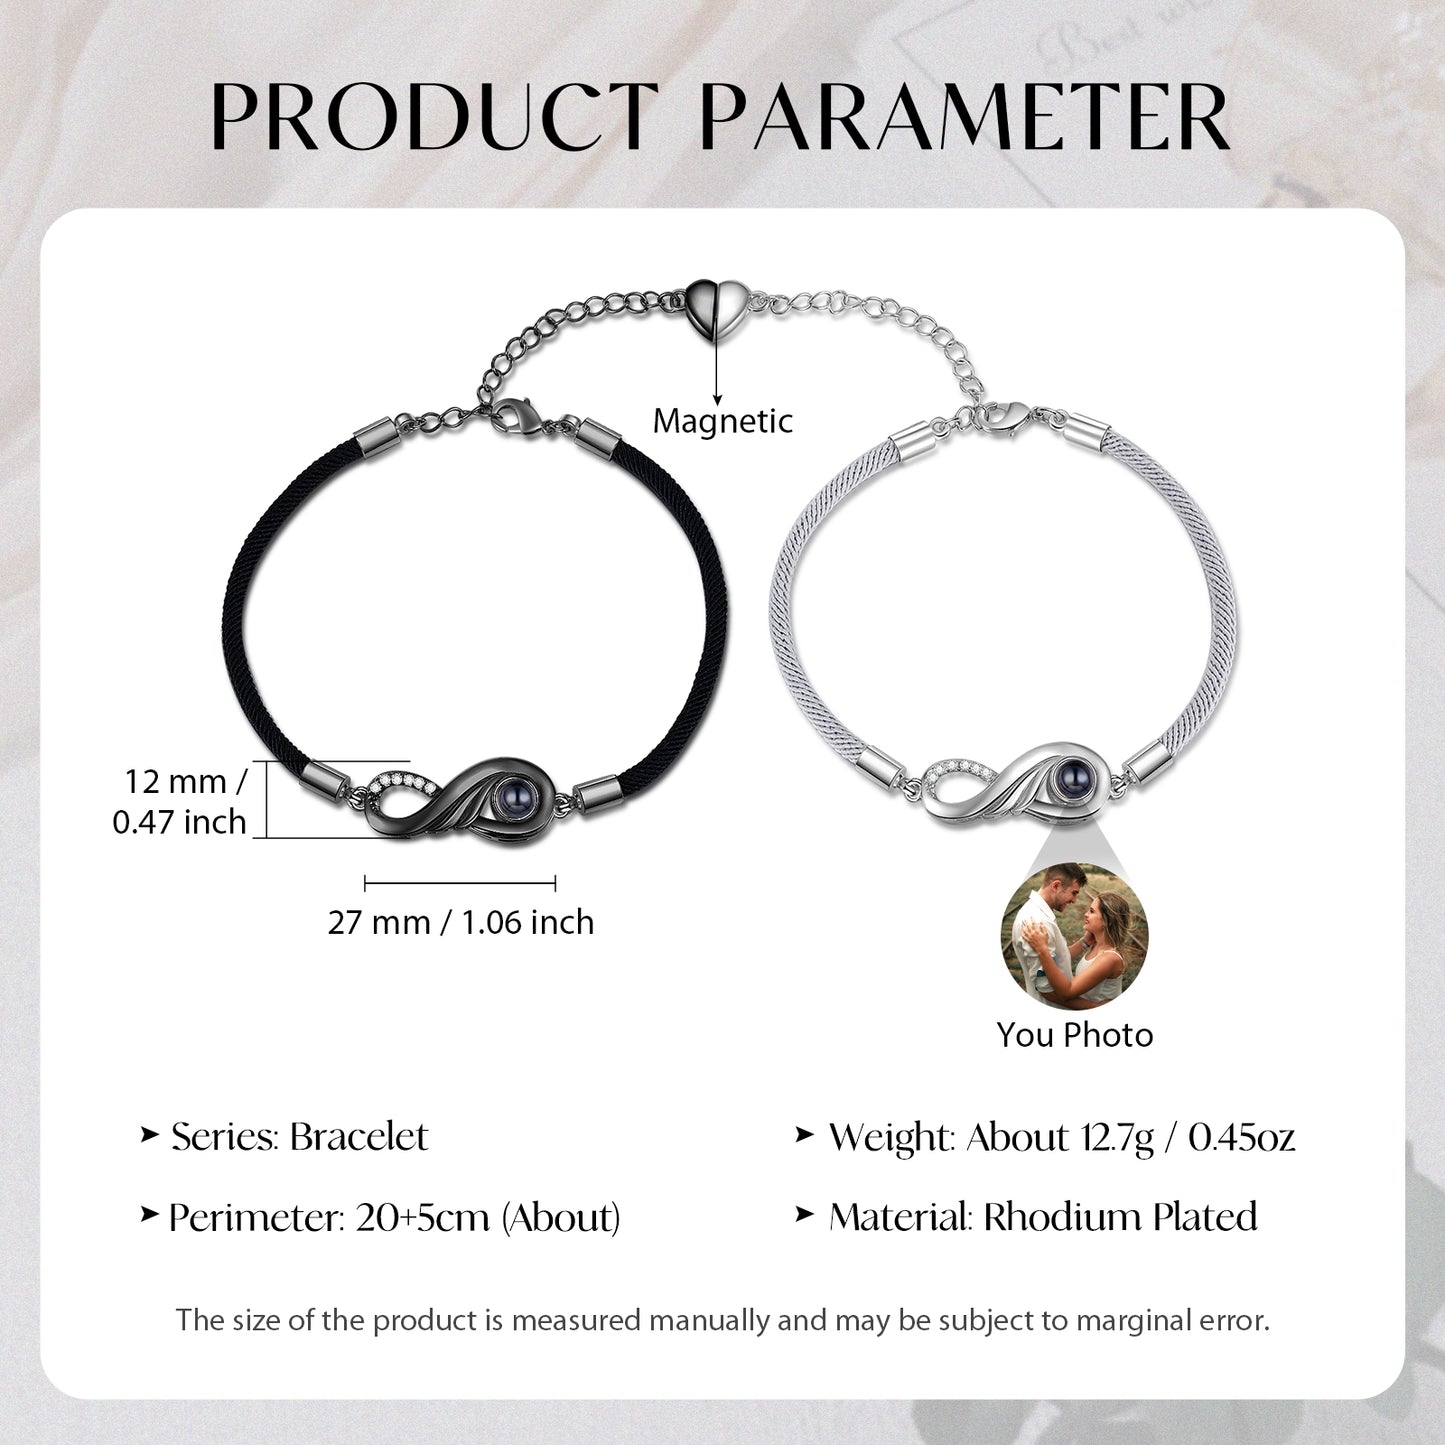 Custom Photo Projection Infinity Couple Bracelet